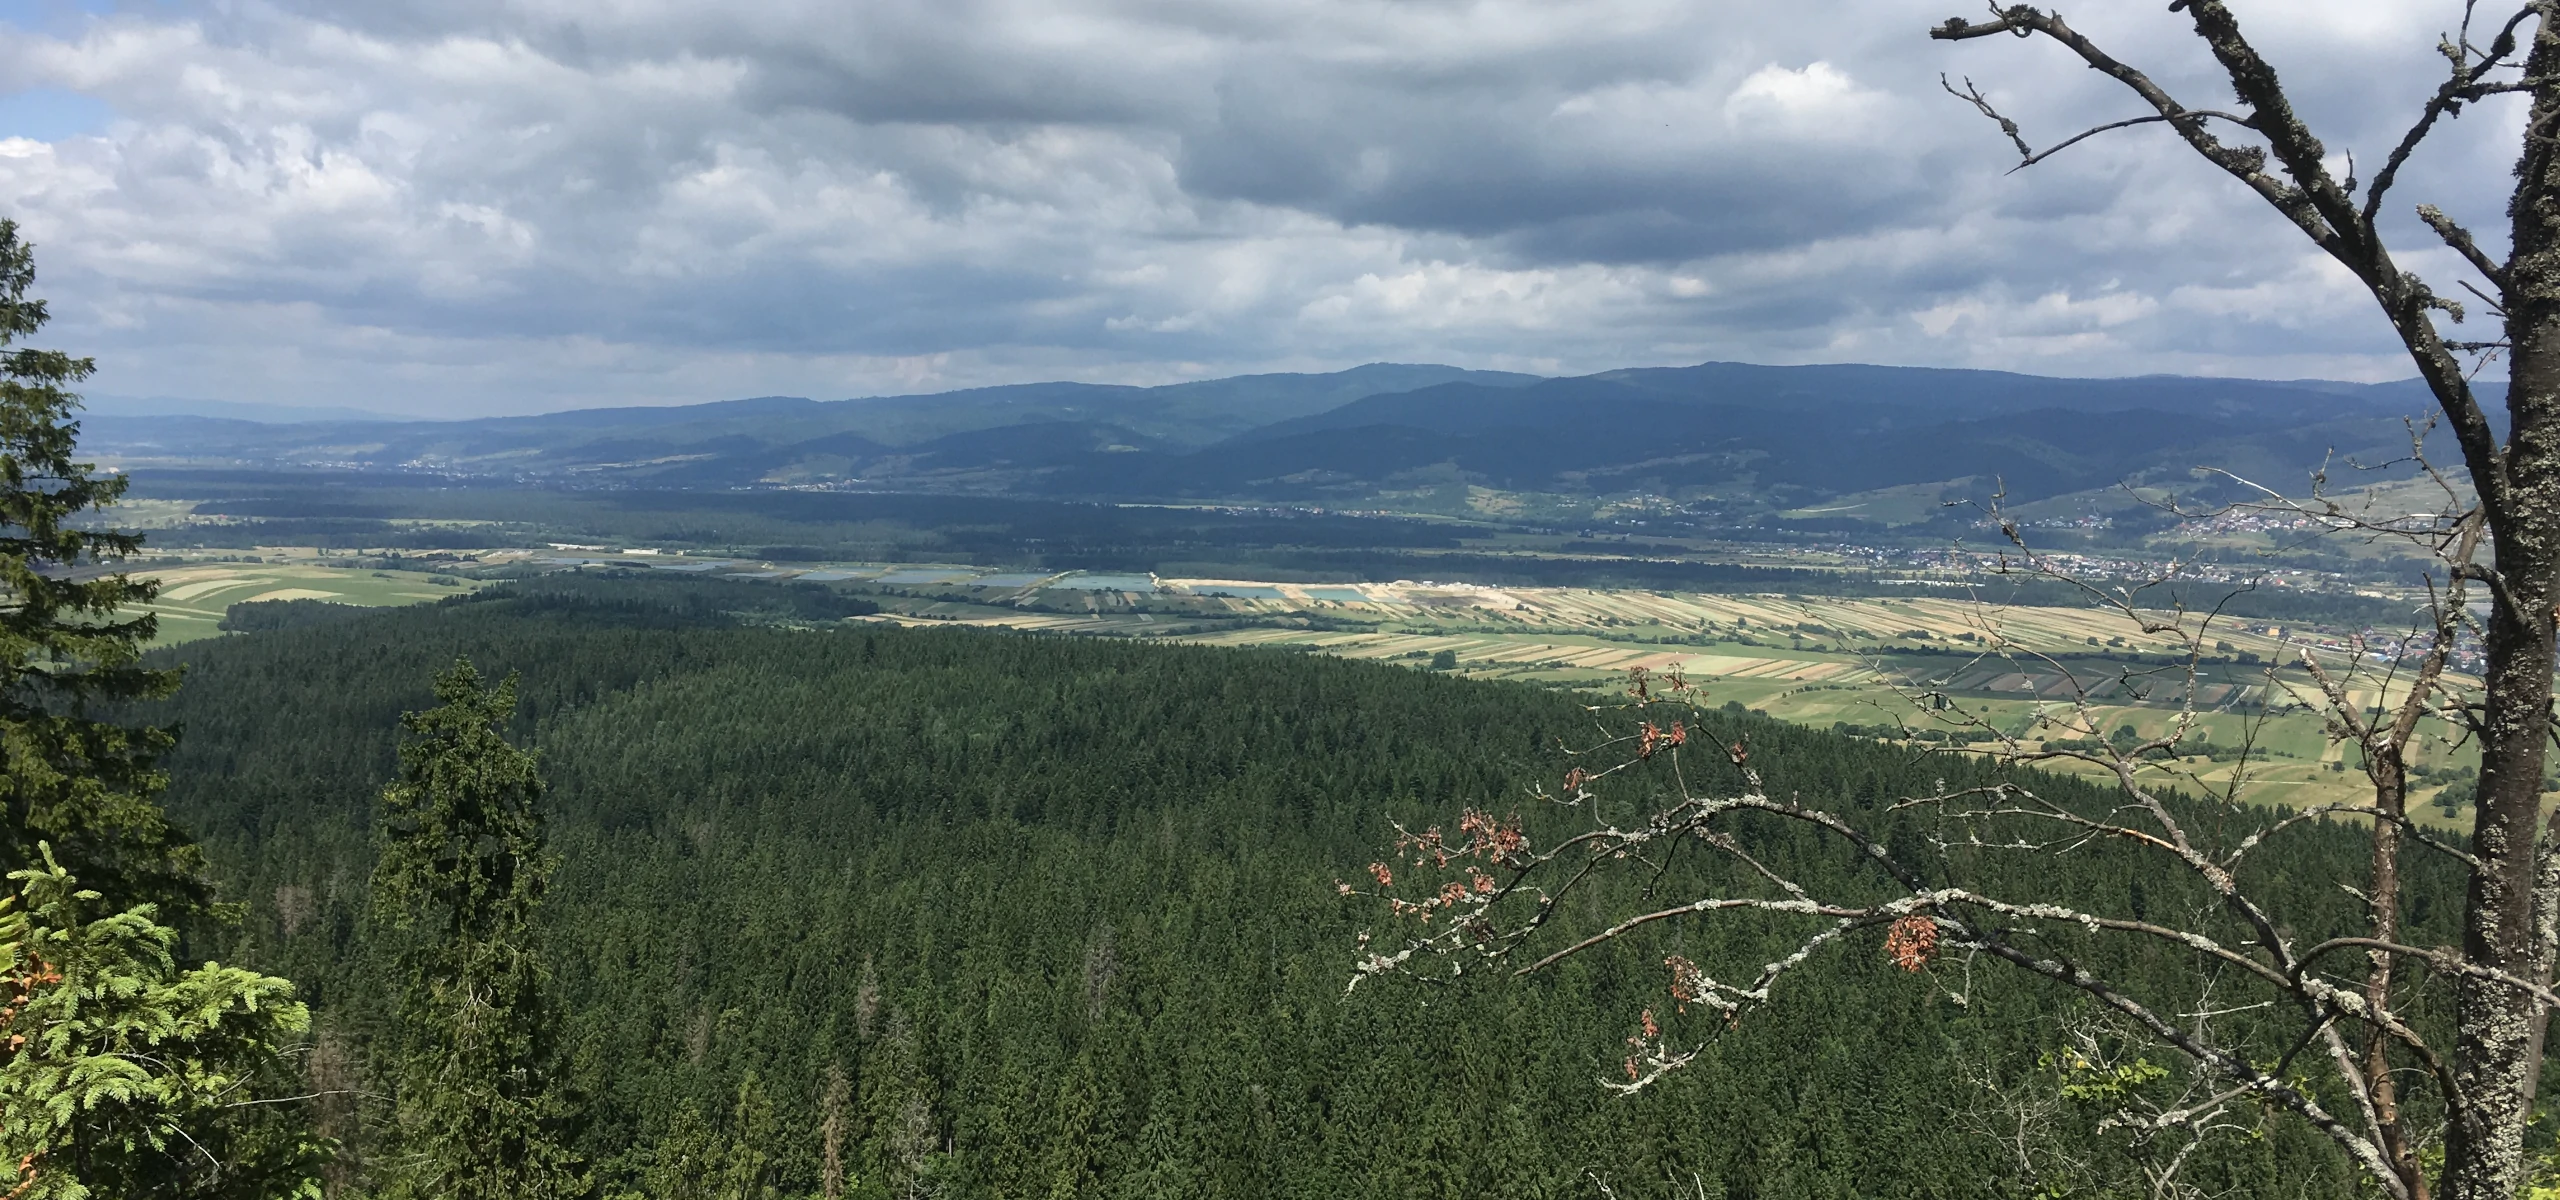 Gorce panorama from mount Żar (Branisko)